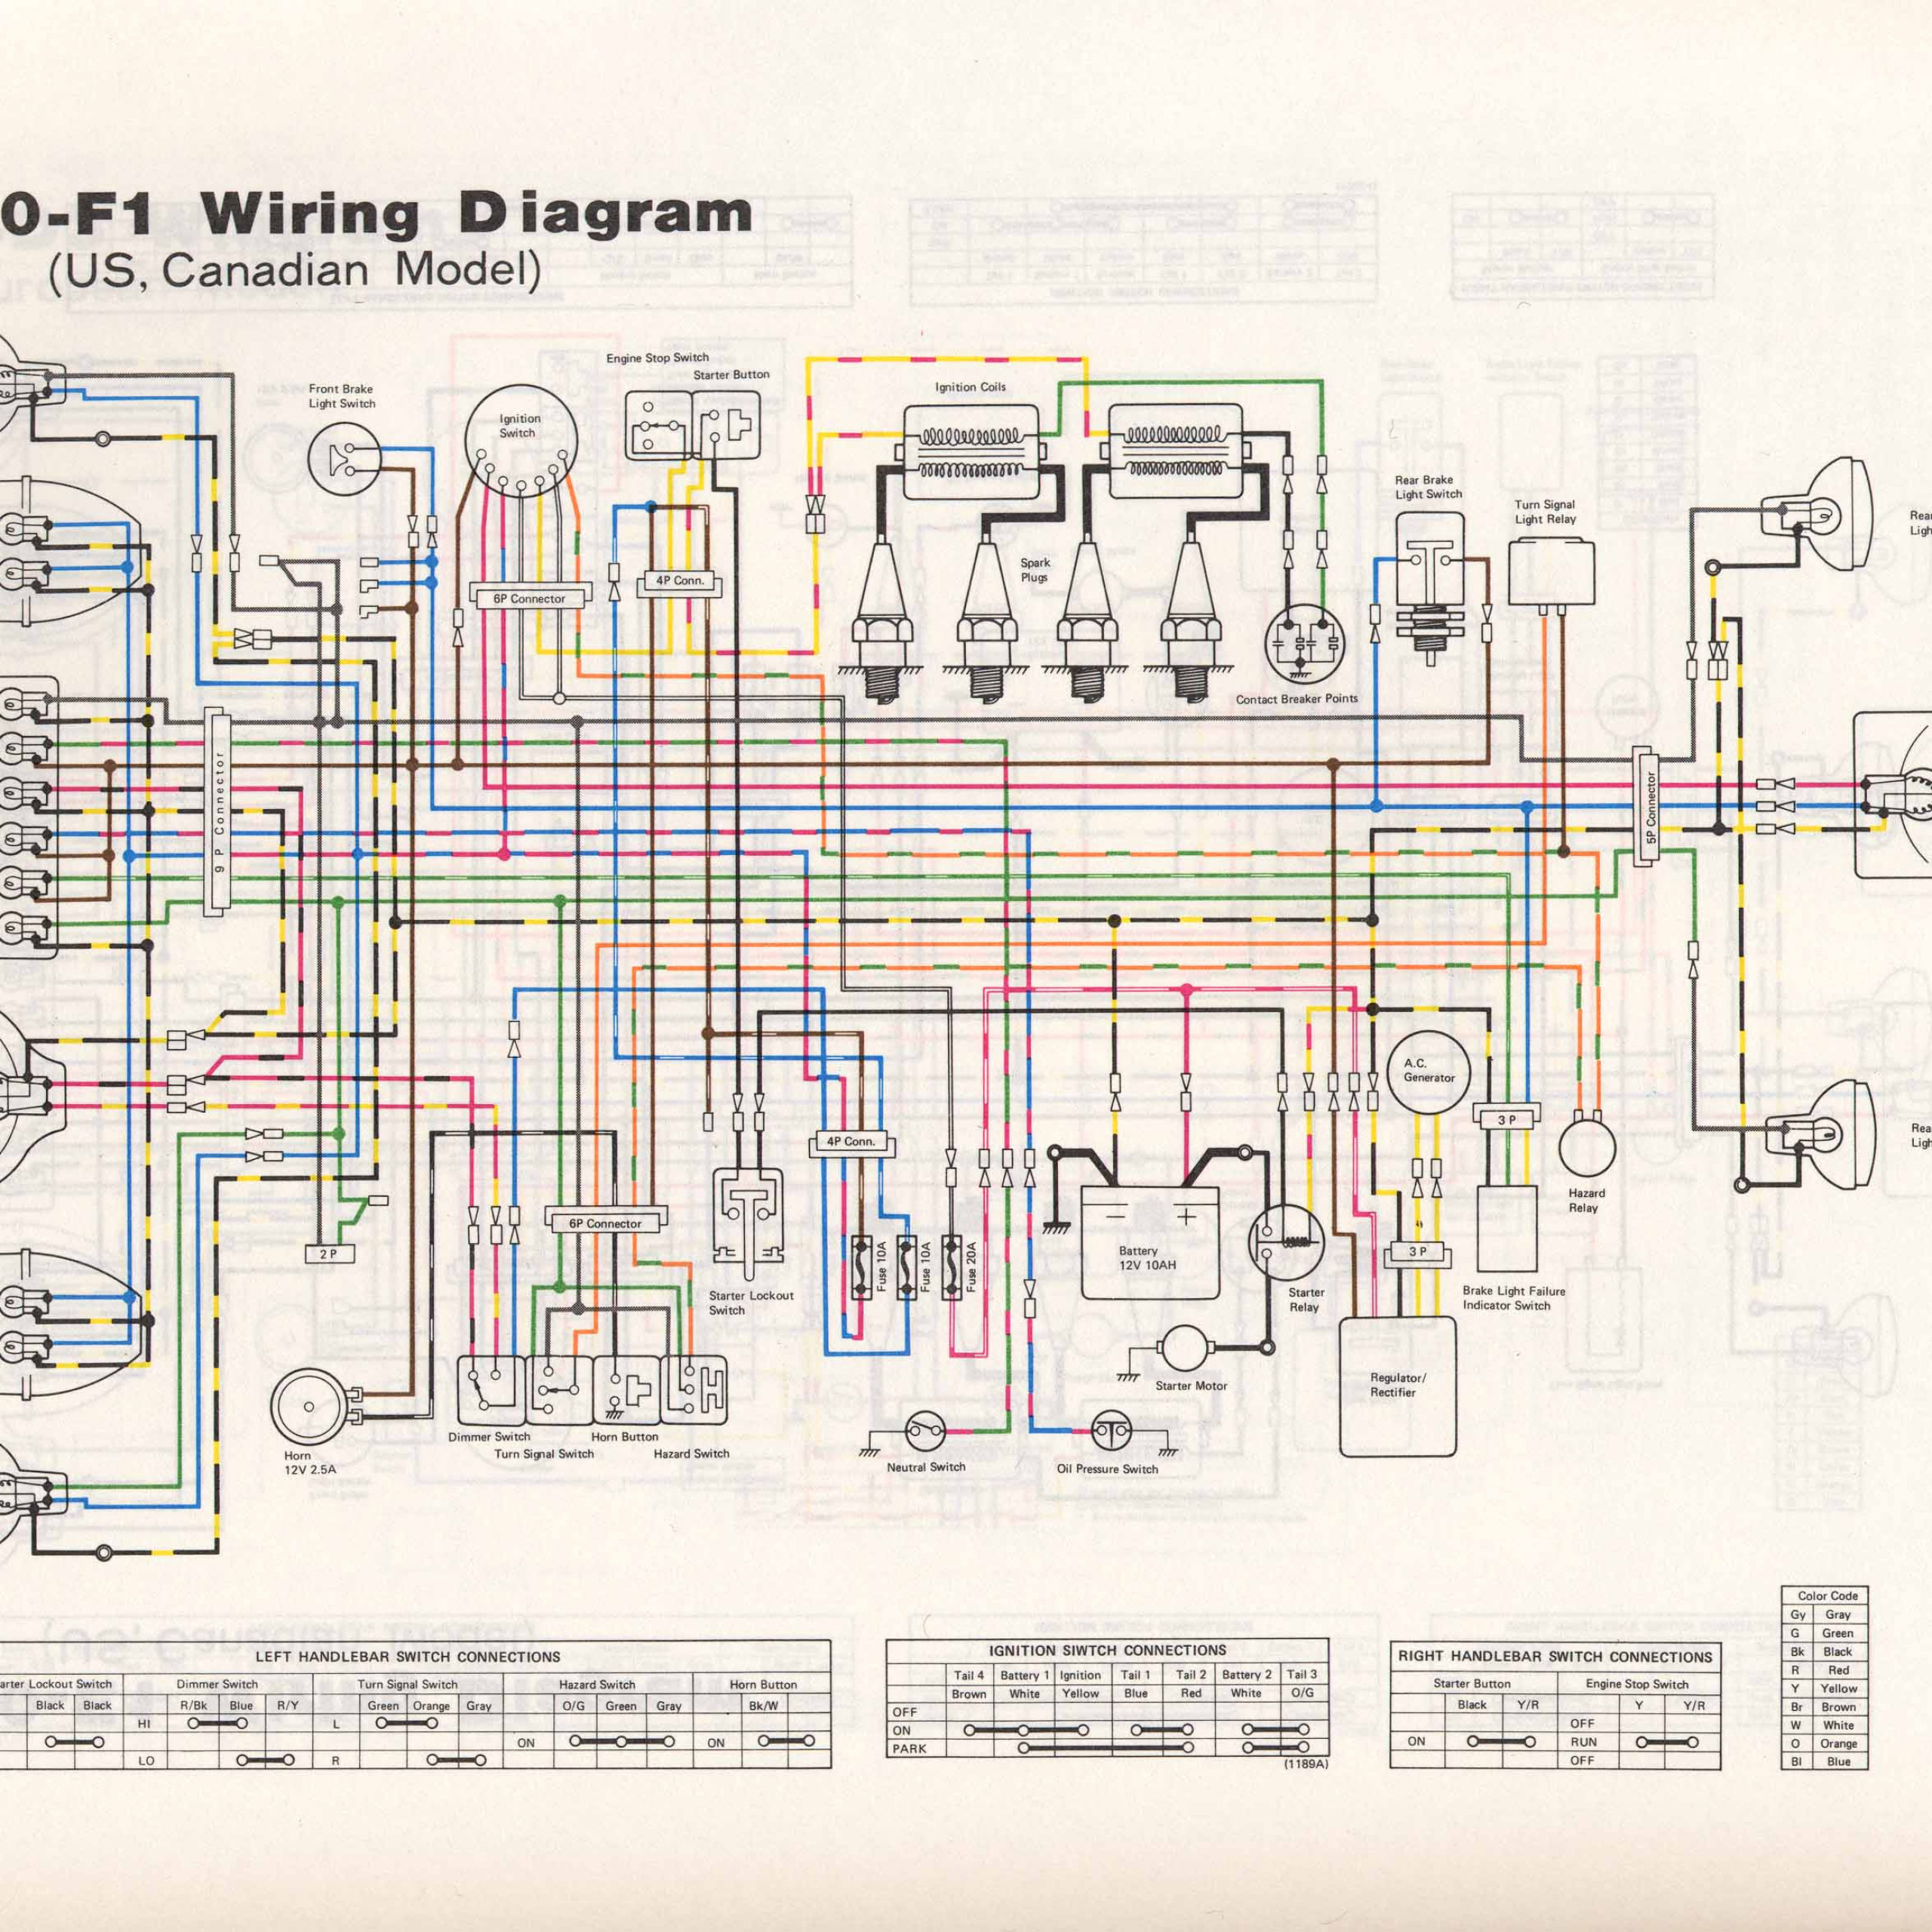 Diagram] 2002 Kawasaki 650 Wiring Diagram Full Version Hd intended for Er 6 Wiring Diagram